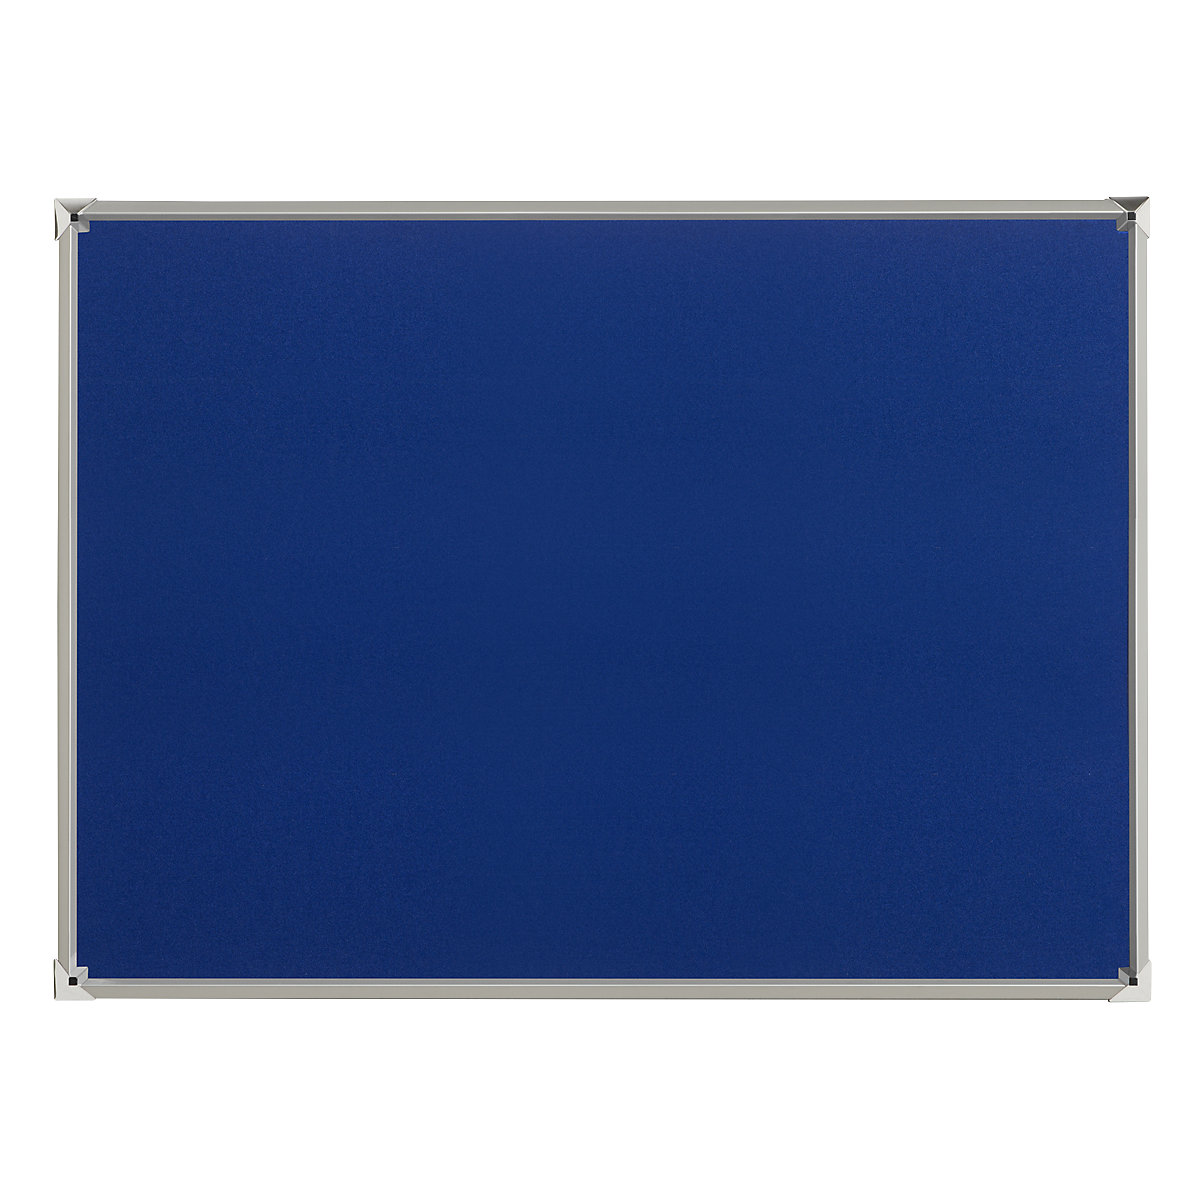 EUROKRAFTpro Pinnwand mit Alu-Rahmen, Stoffbezug, blau, BxH 1200 x 900 mm